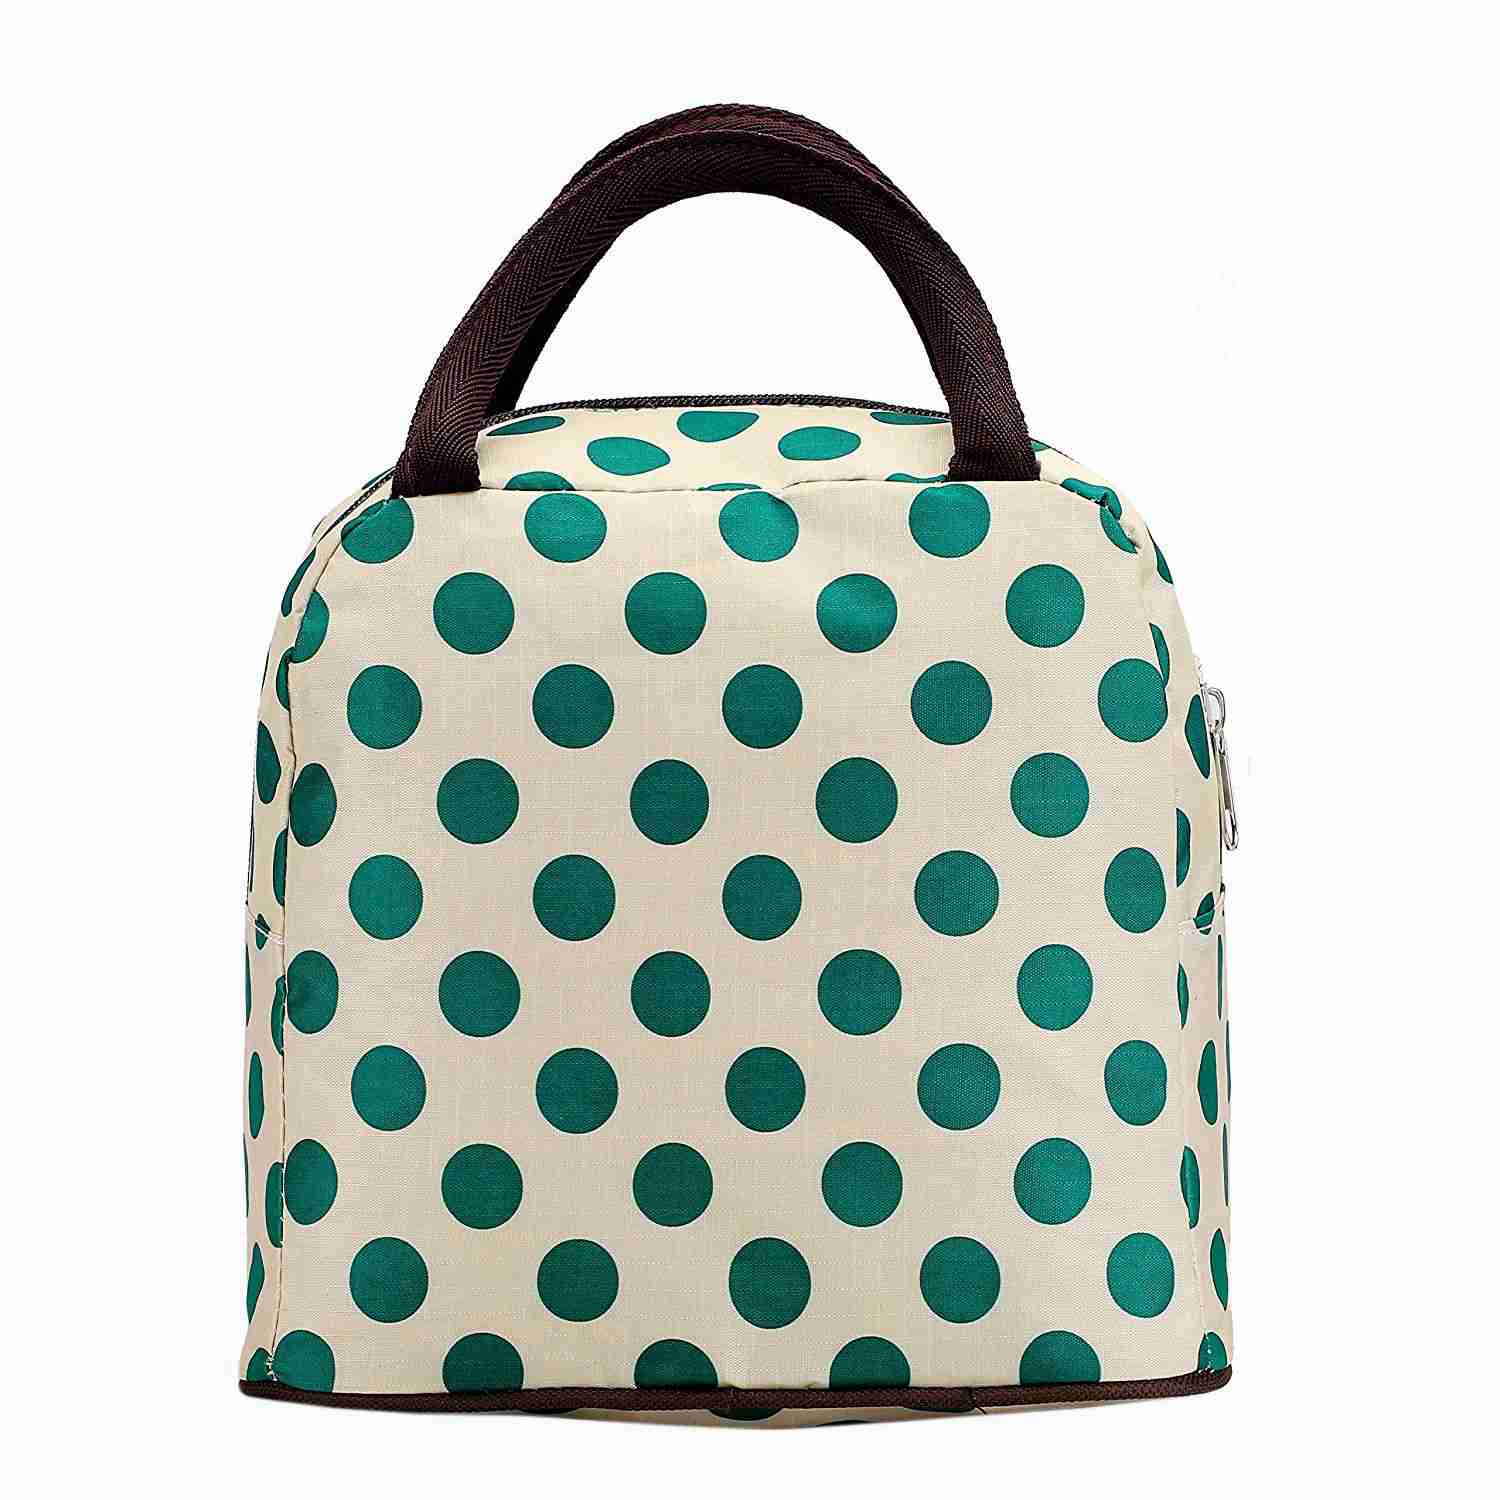 Fashion Lunch Bag Tote for Women Work School green - ebowsos